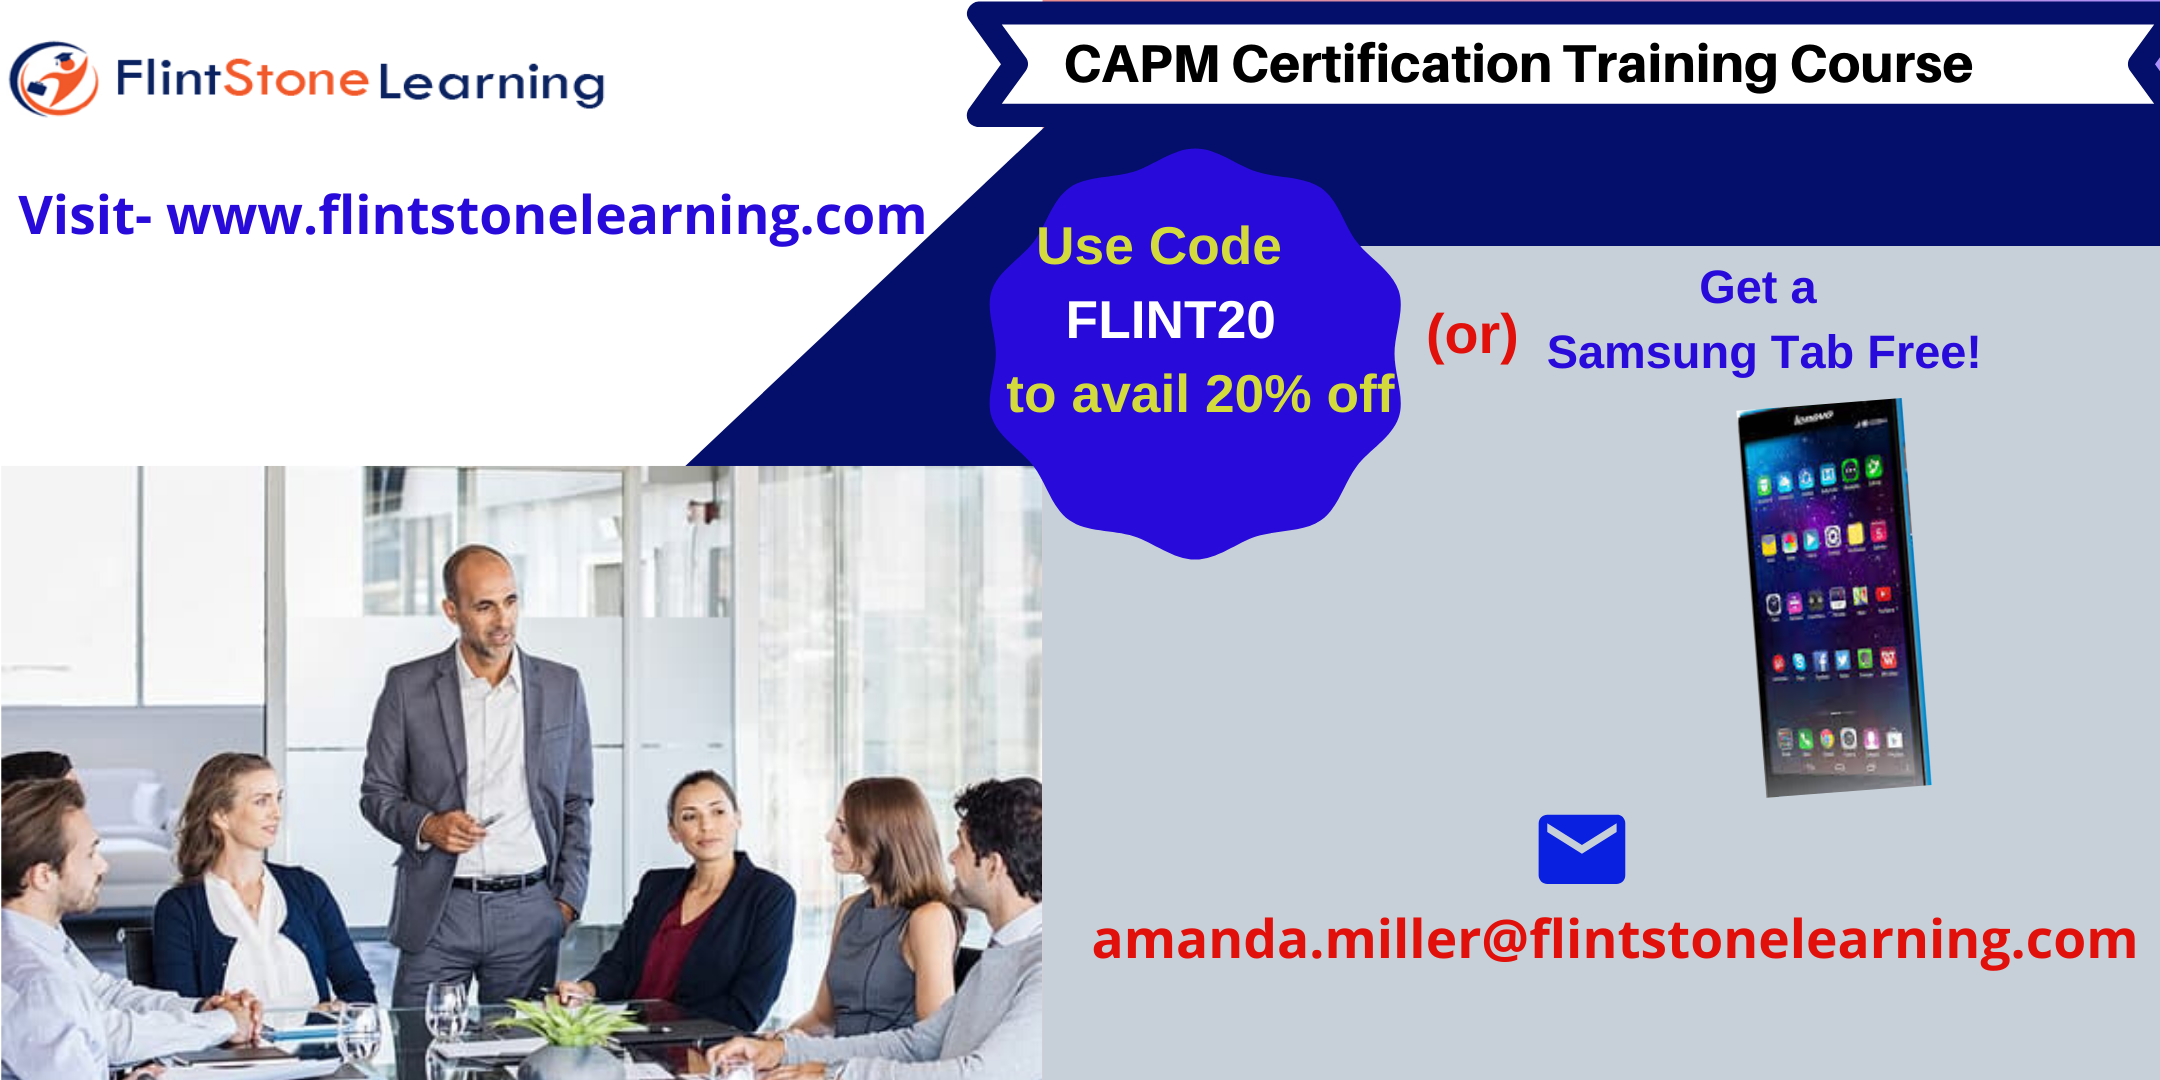 CAPM Certification Training Course in Eureka, CA